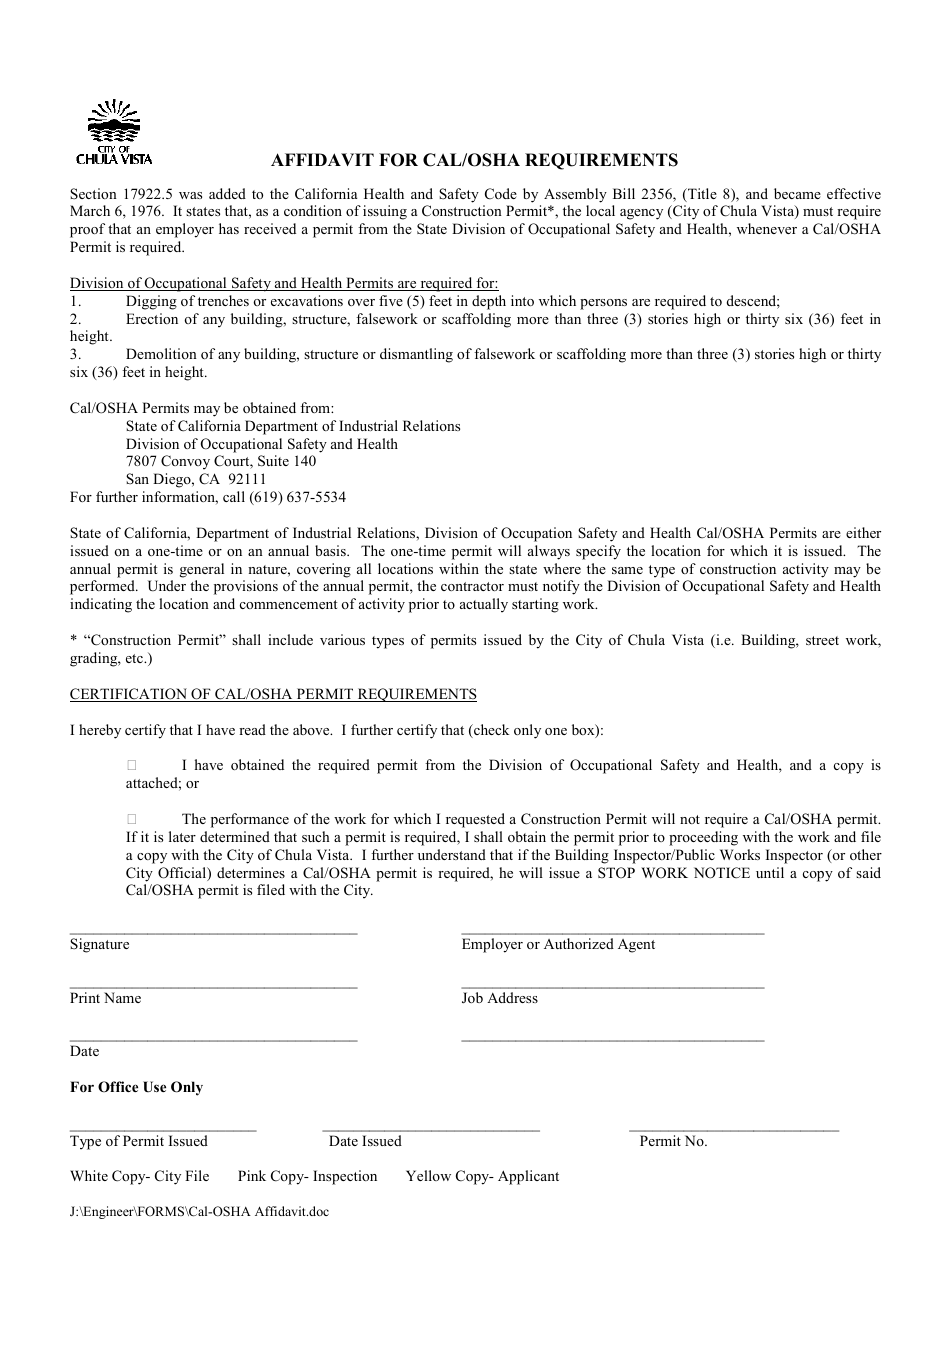 Affidavit for Cal / Osha Requirements - City of Chula Vista, California, Page 1